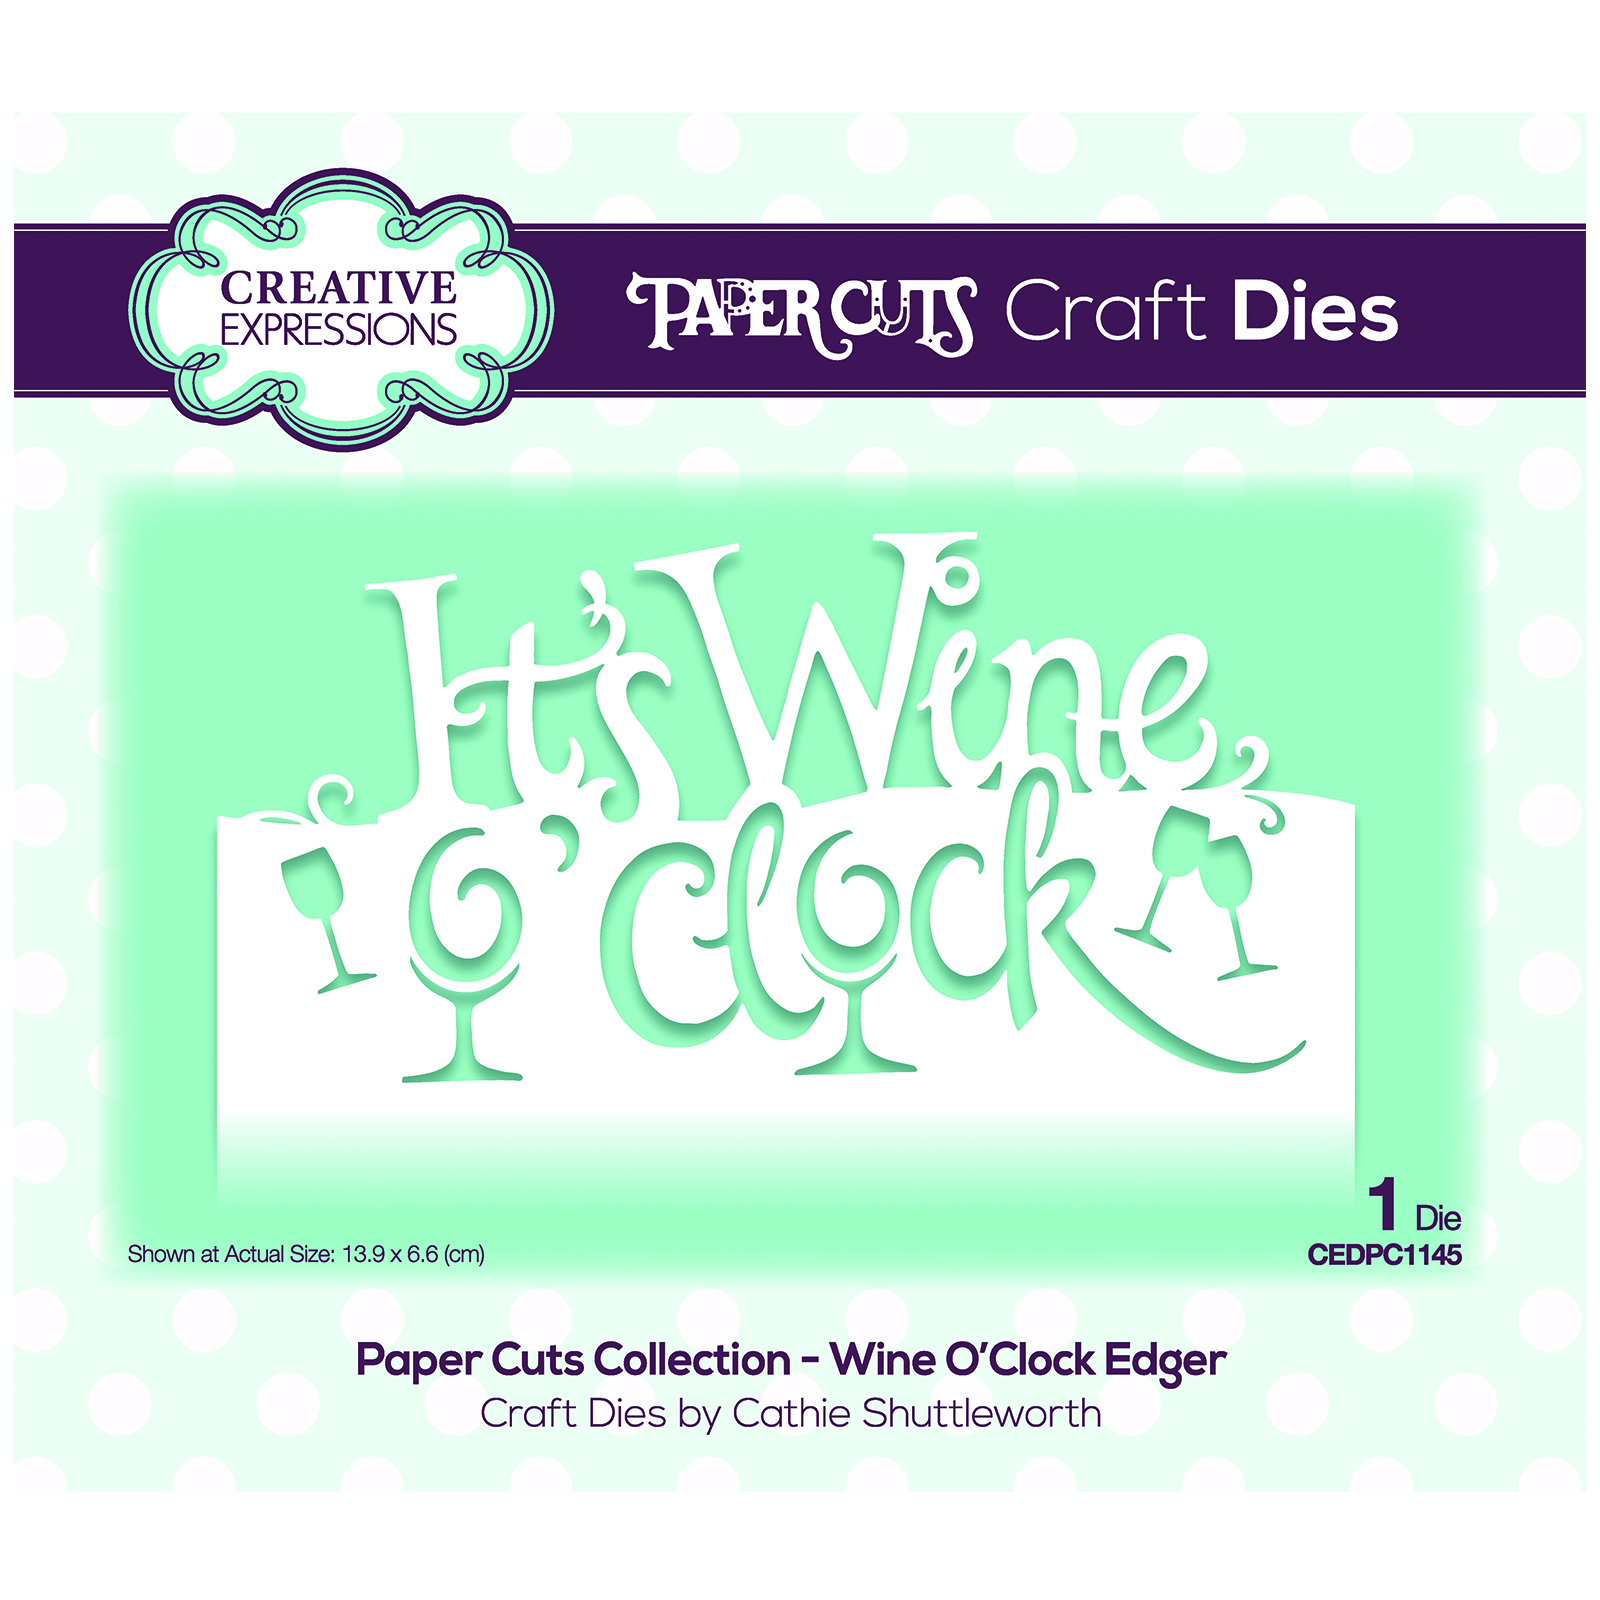 Paper Cuts • Craft Stanzschablone edger It's wine o'clock